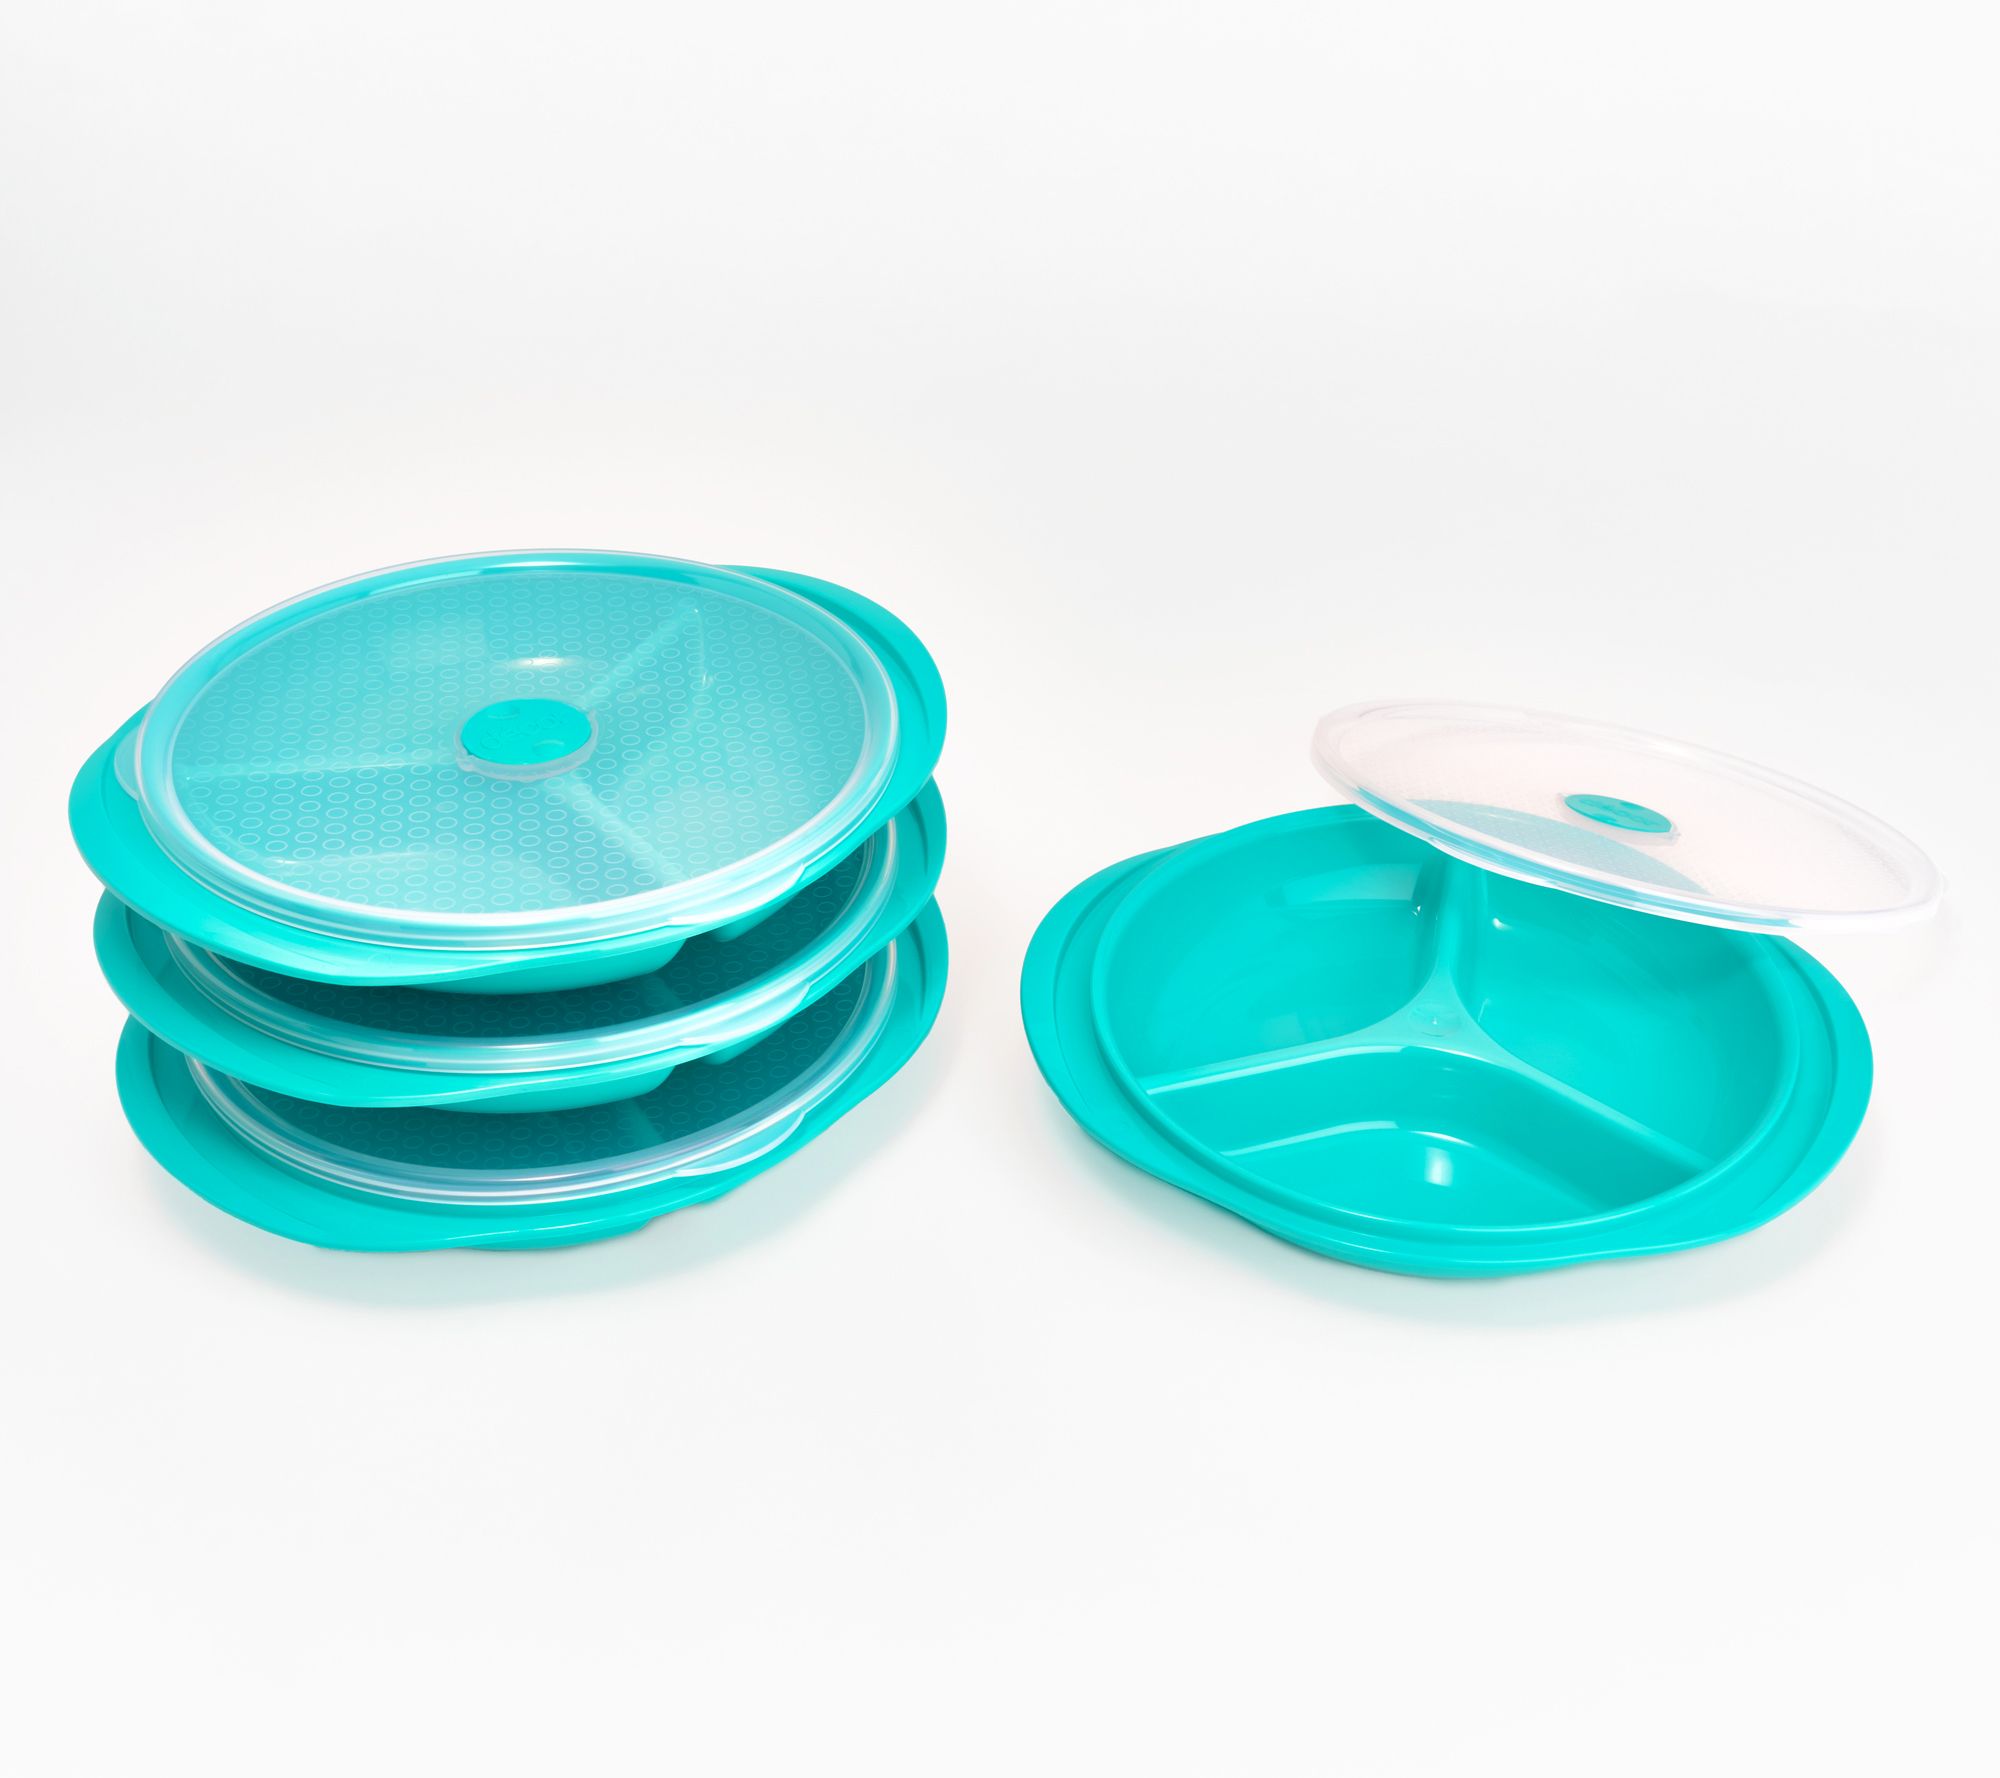 Lids for Plastic Plates